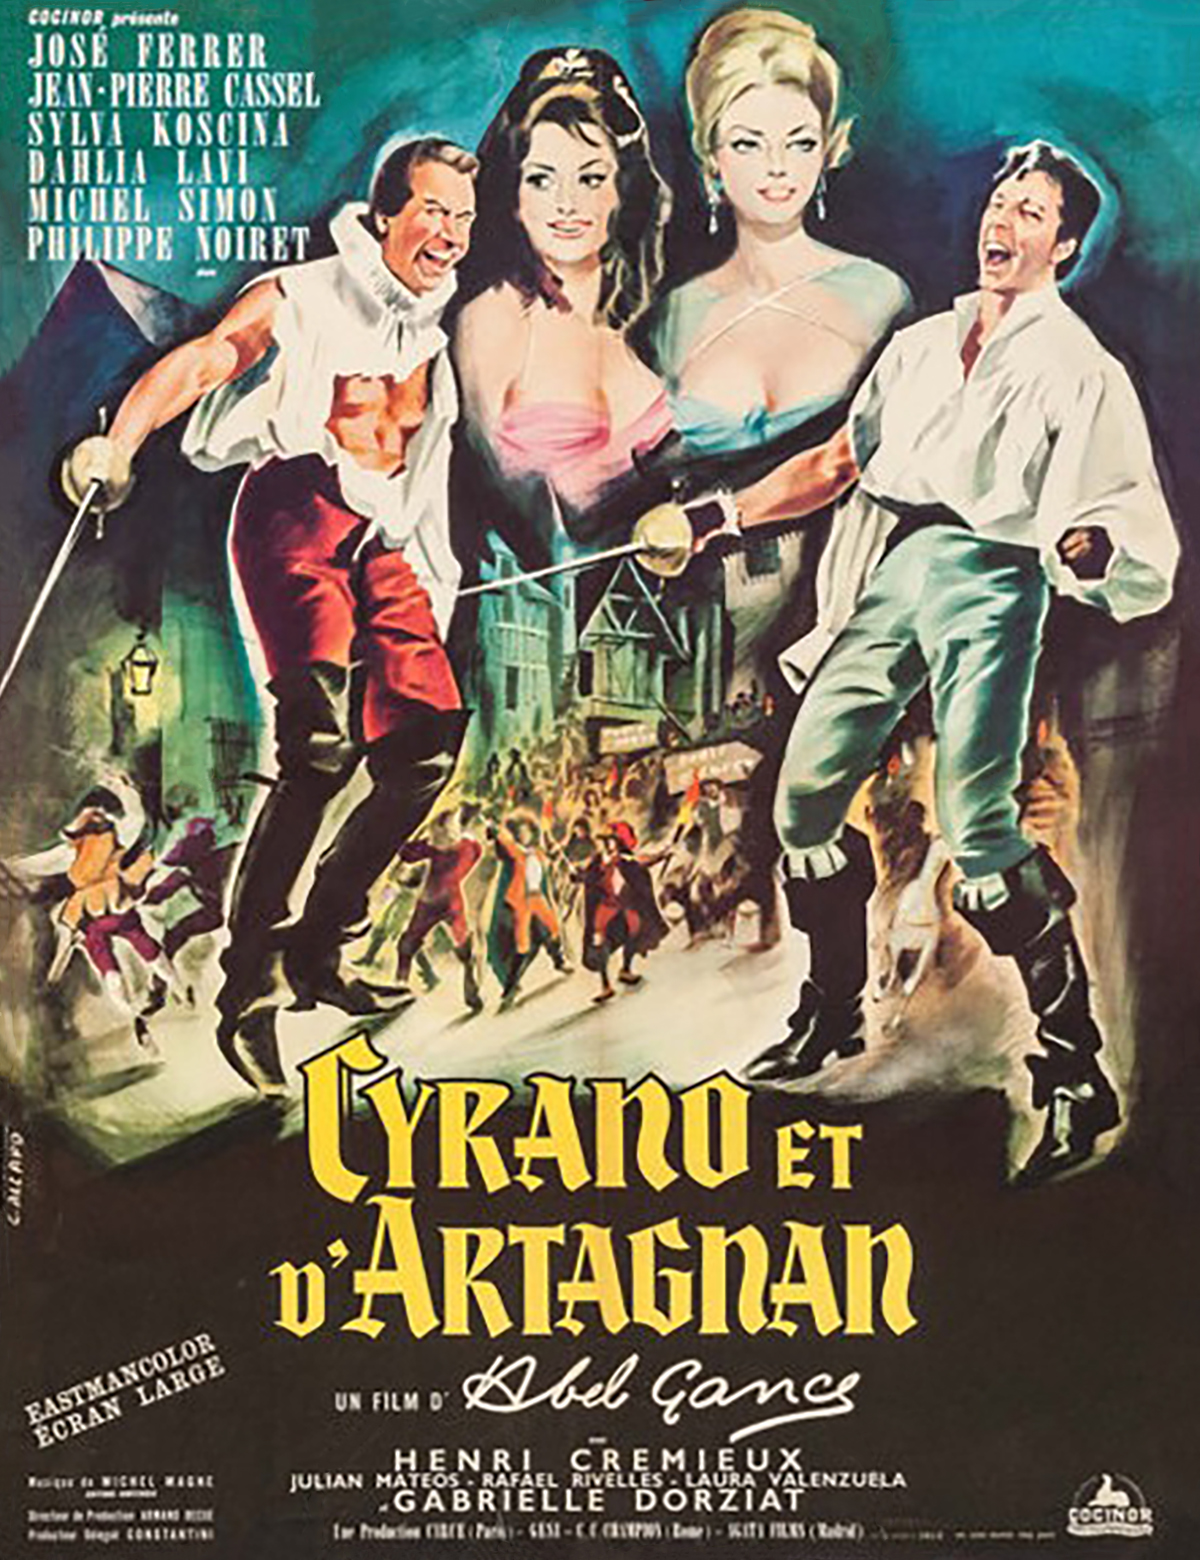 Cyrano et d'Artagnan (1964) Screenshot 3